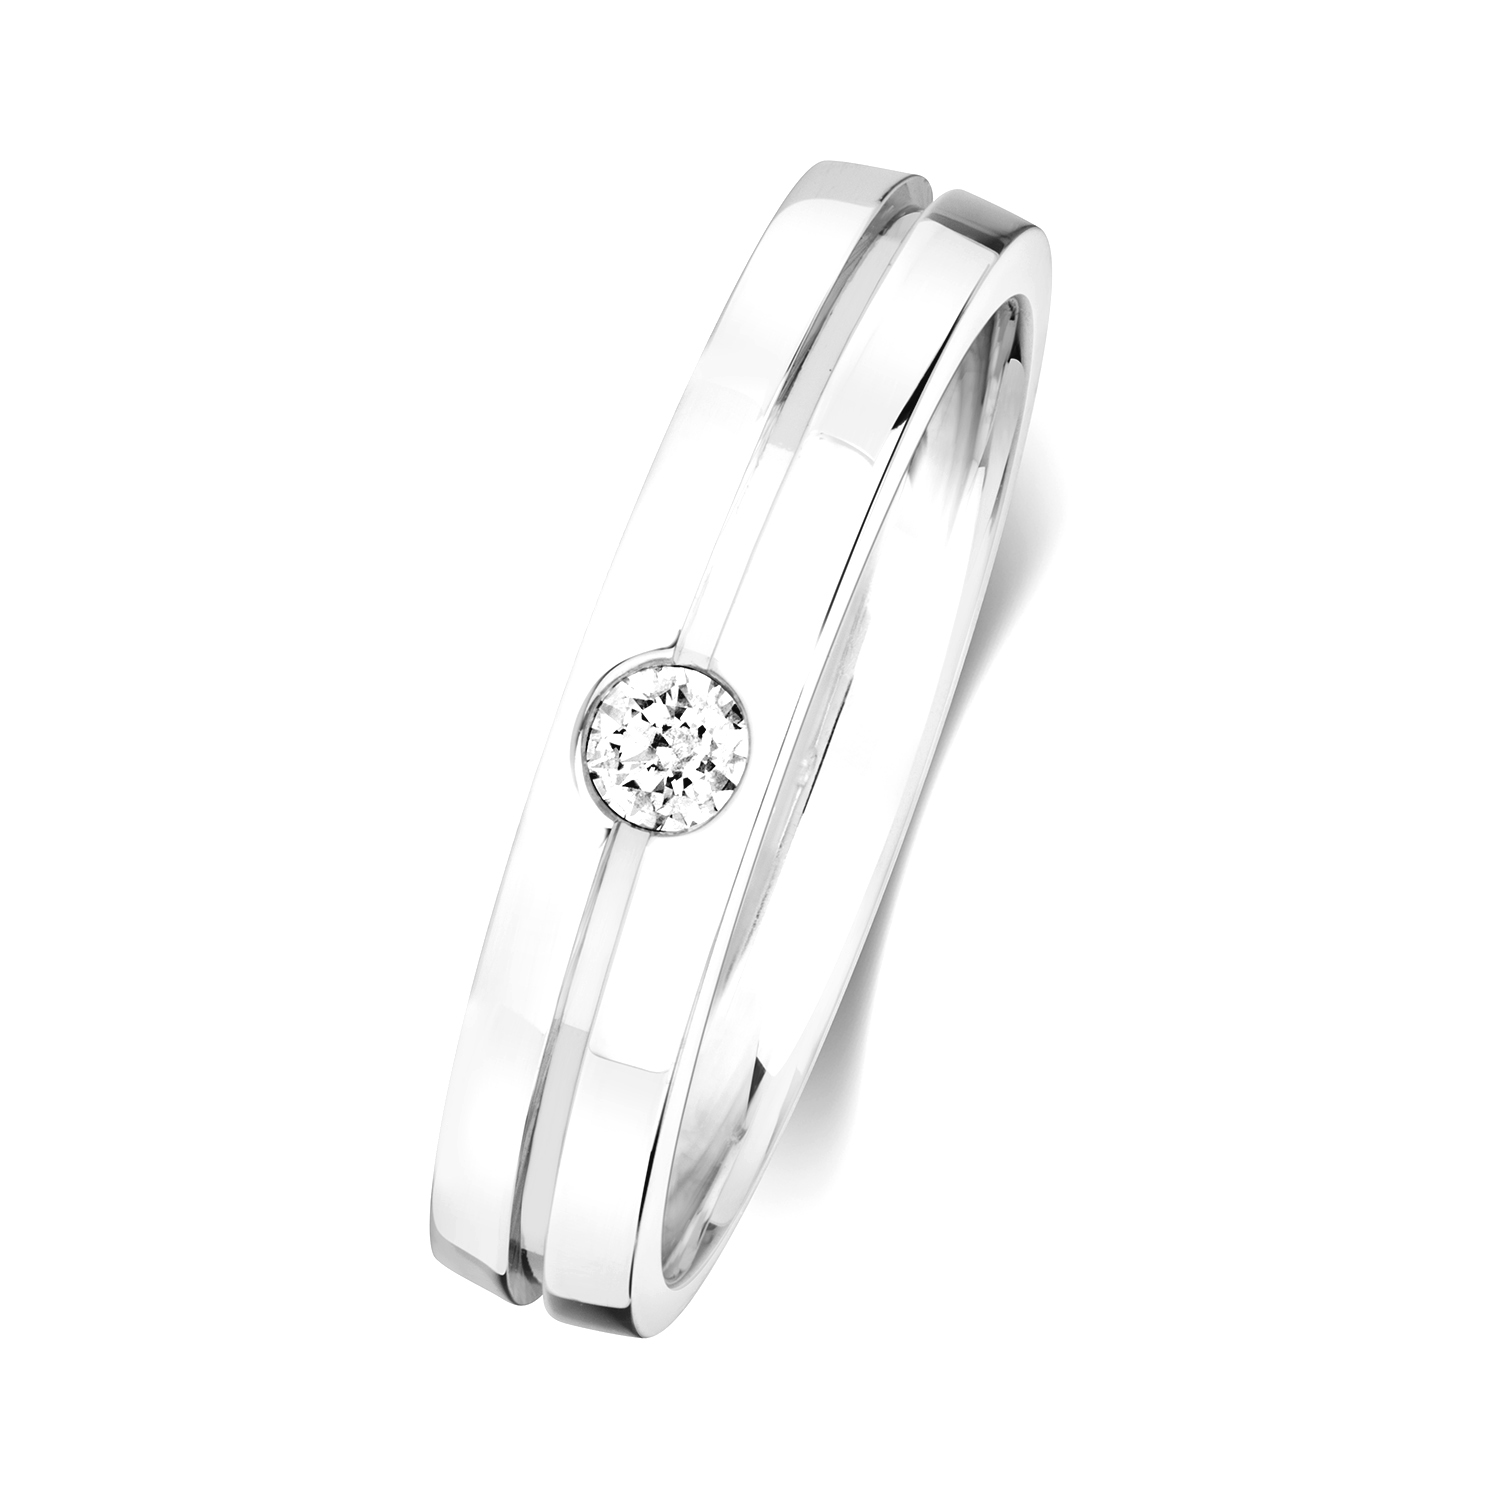 Modern style bezel setting round shape womens wedding ring